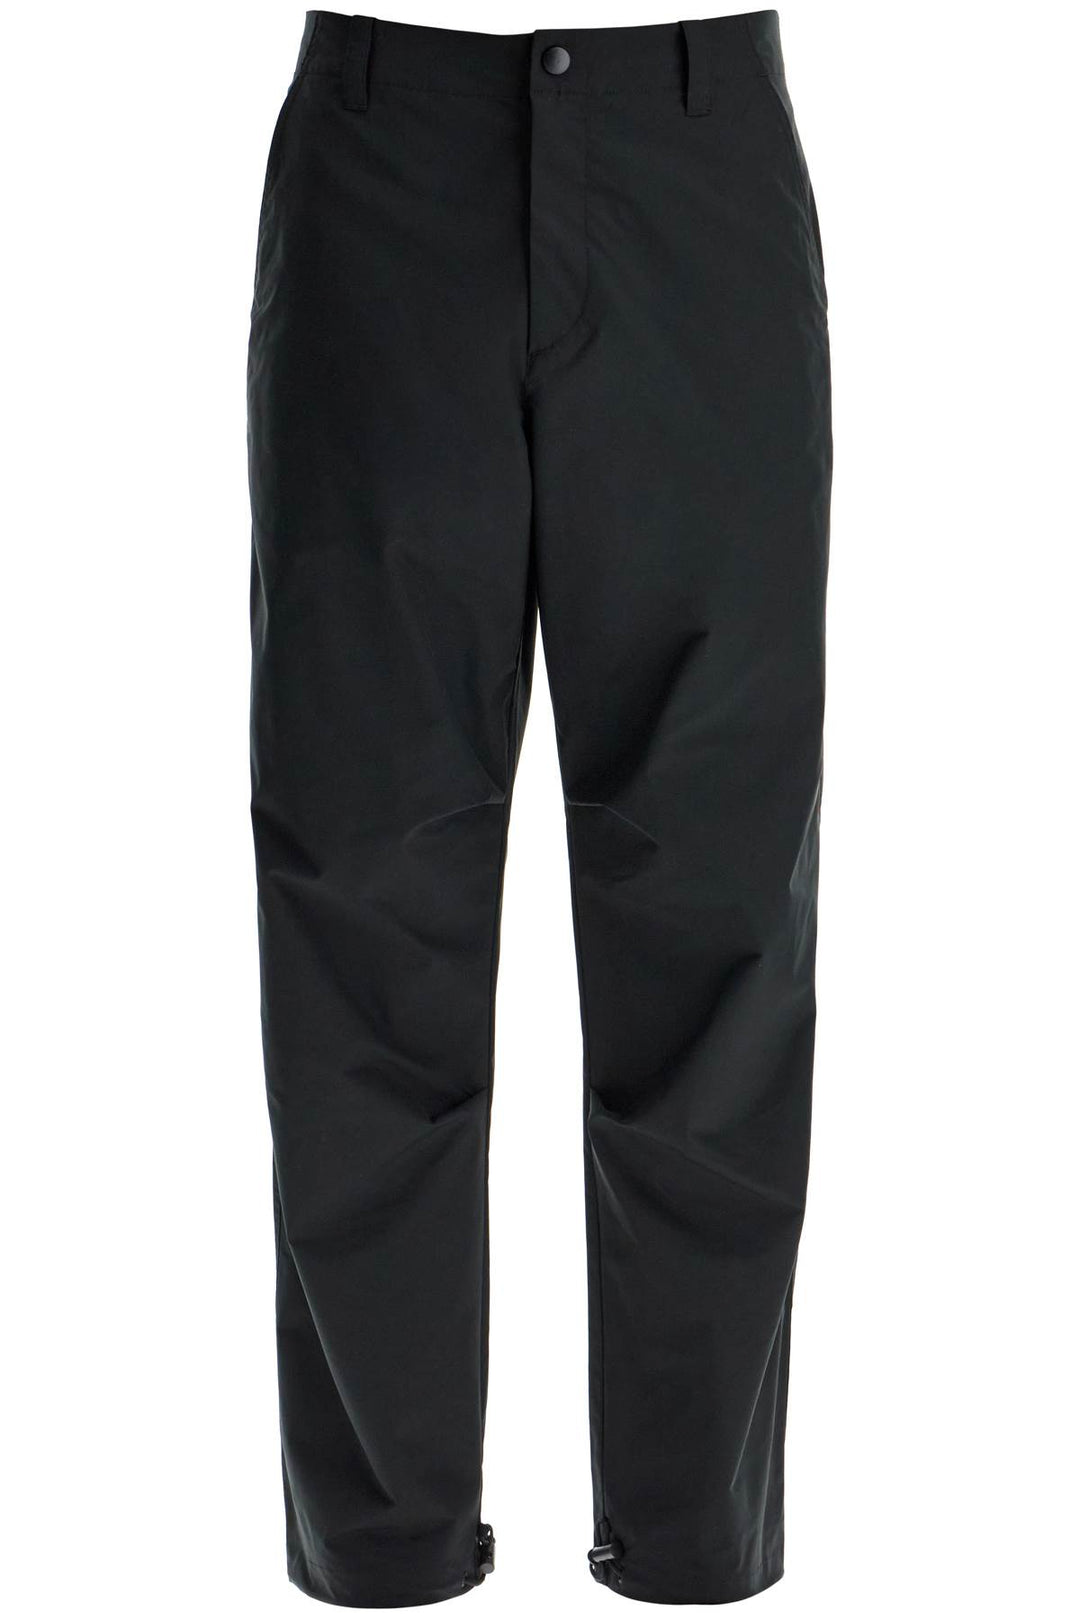 mashi technical fabric pants-0